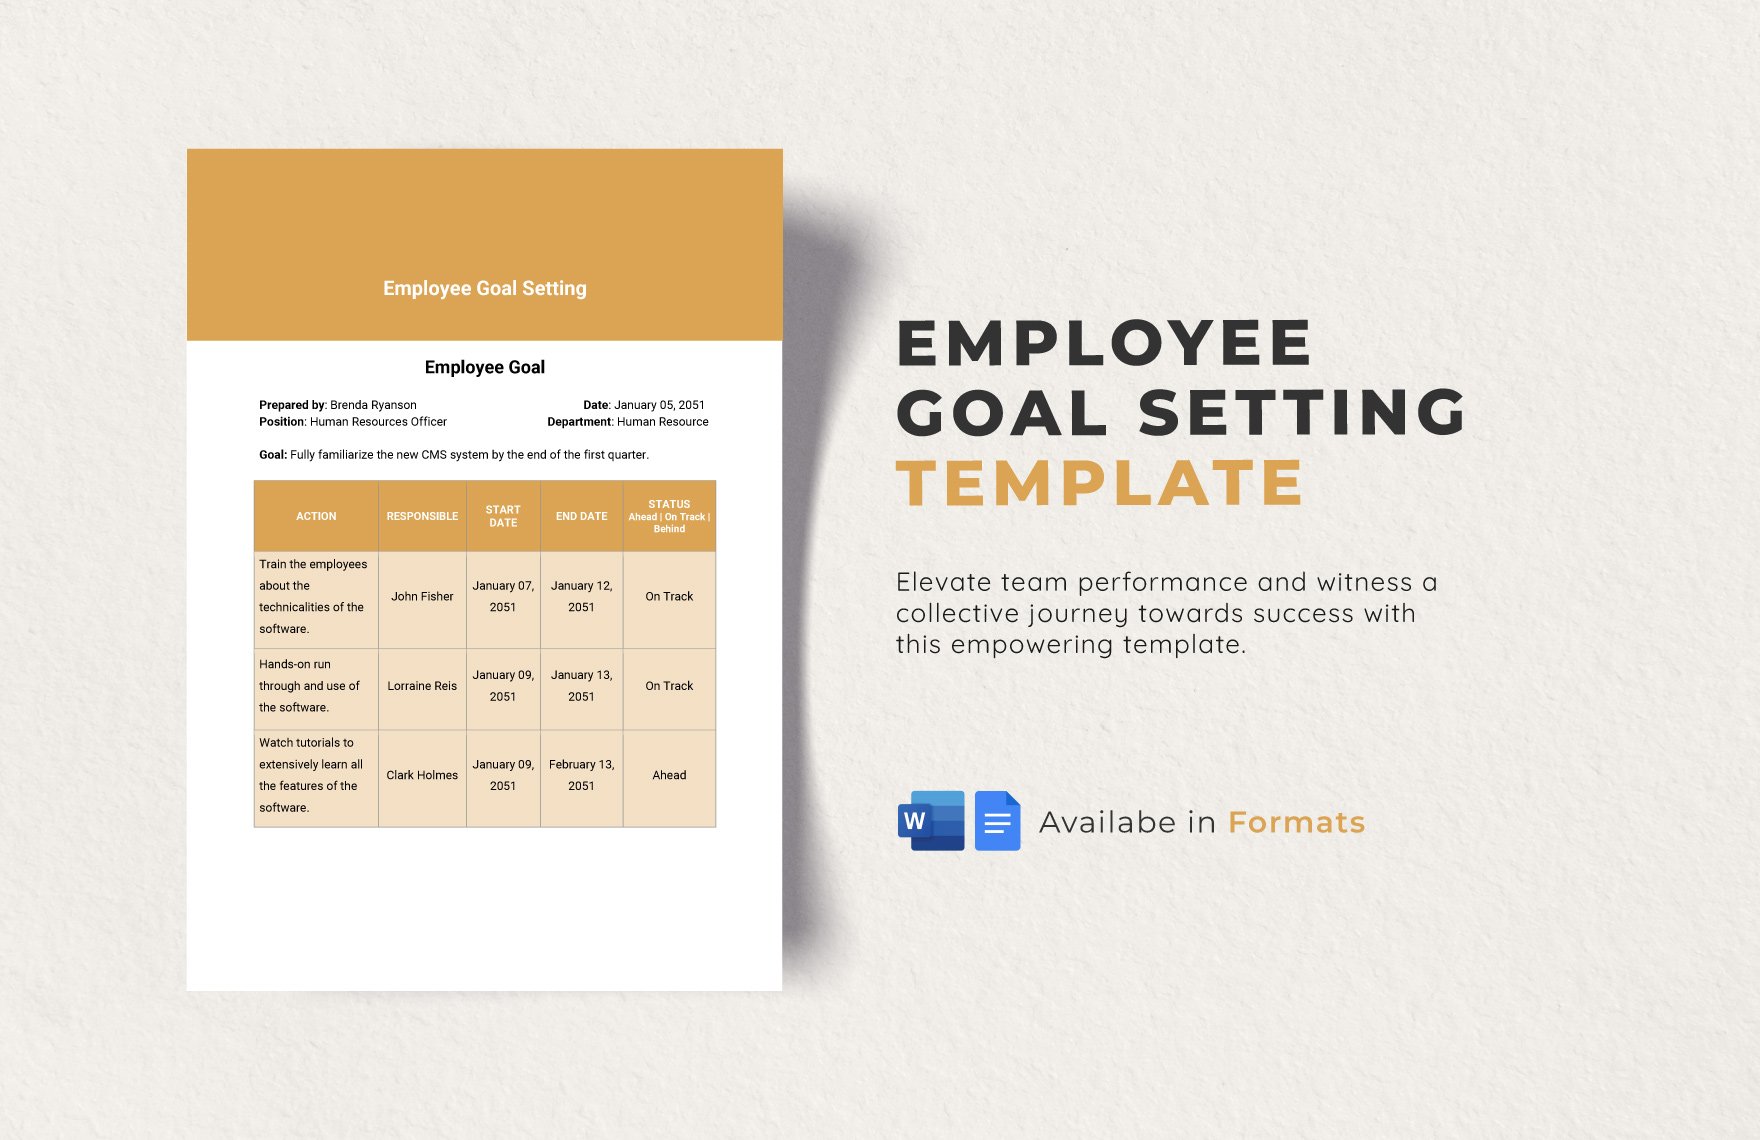 Employee Goal Setting Template